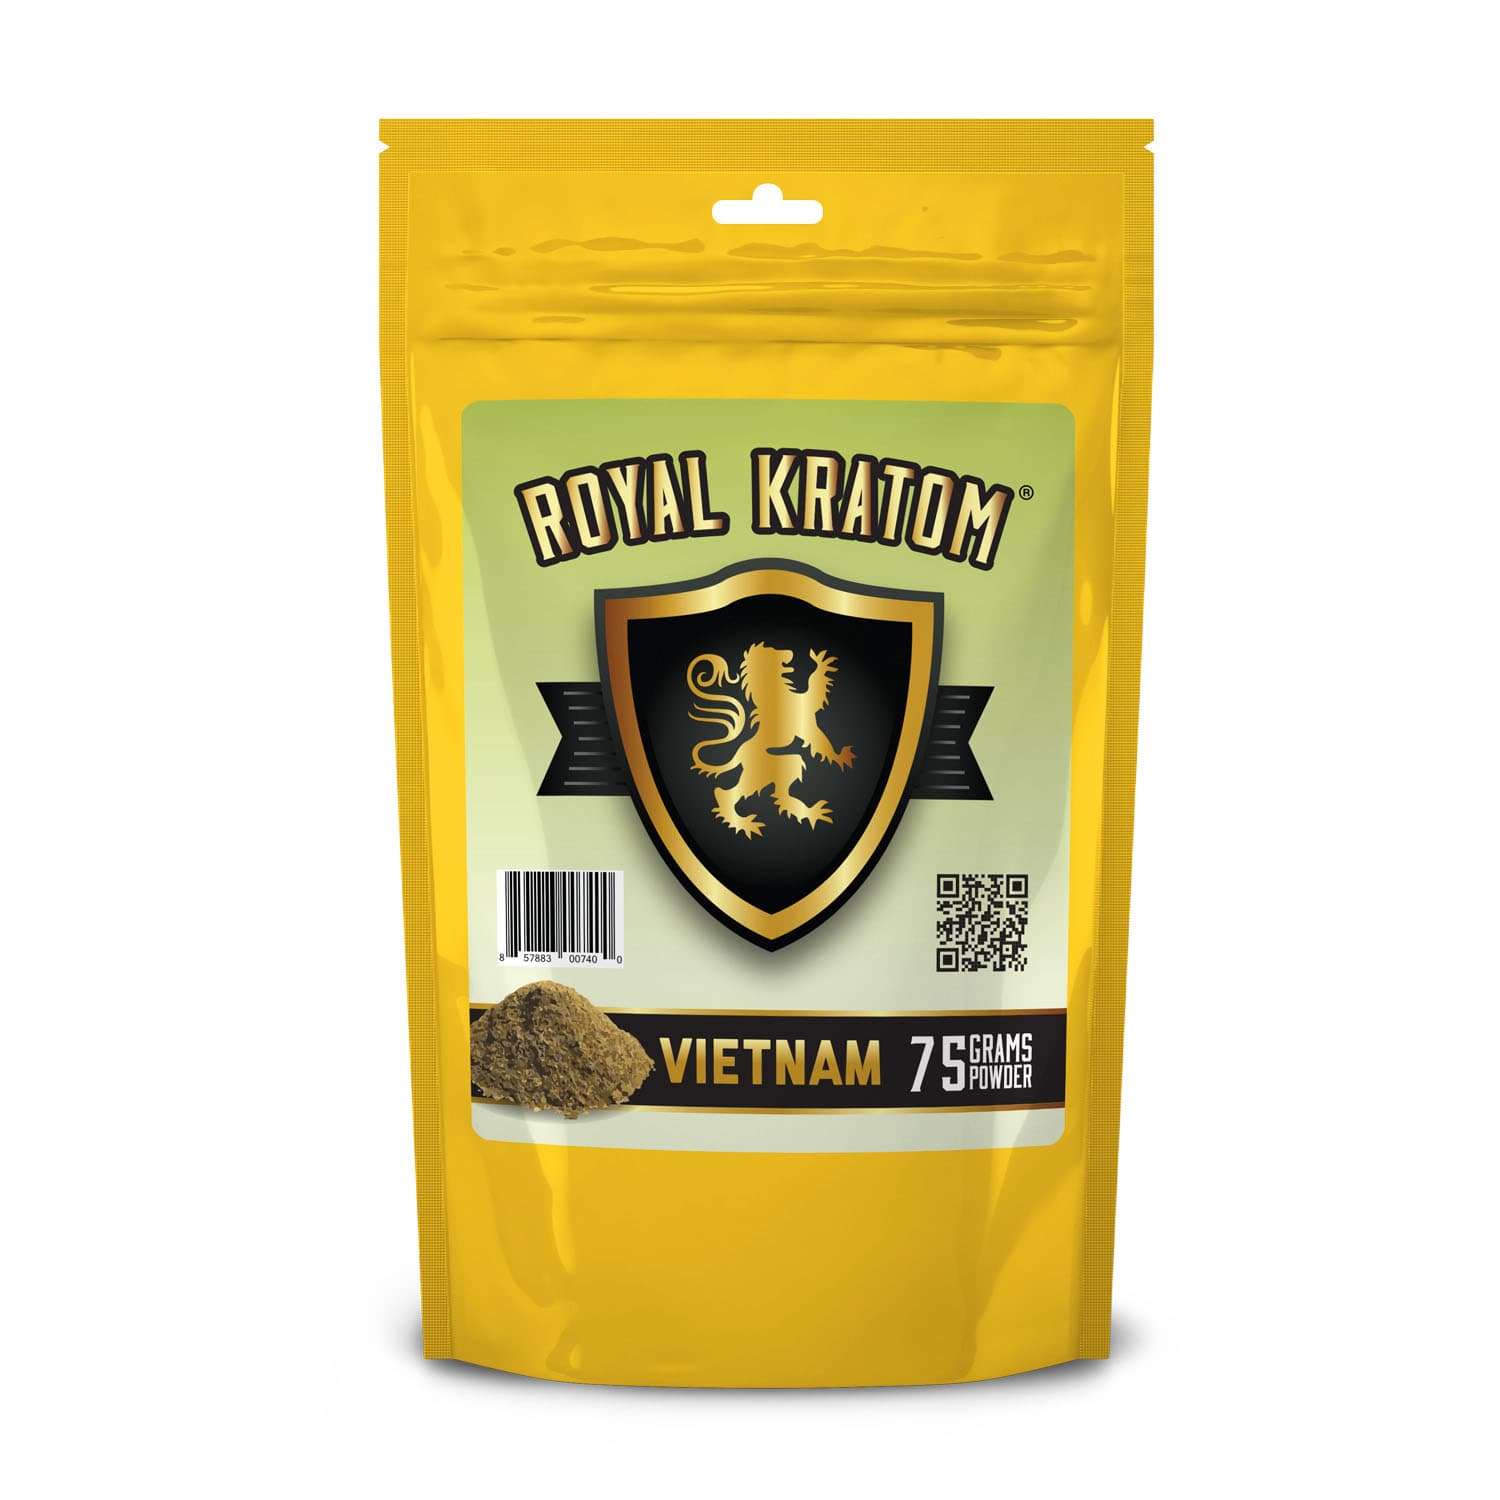 Bag of Royal Kratom Vietnam powder